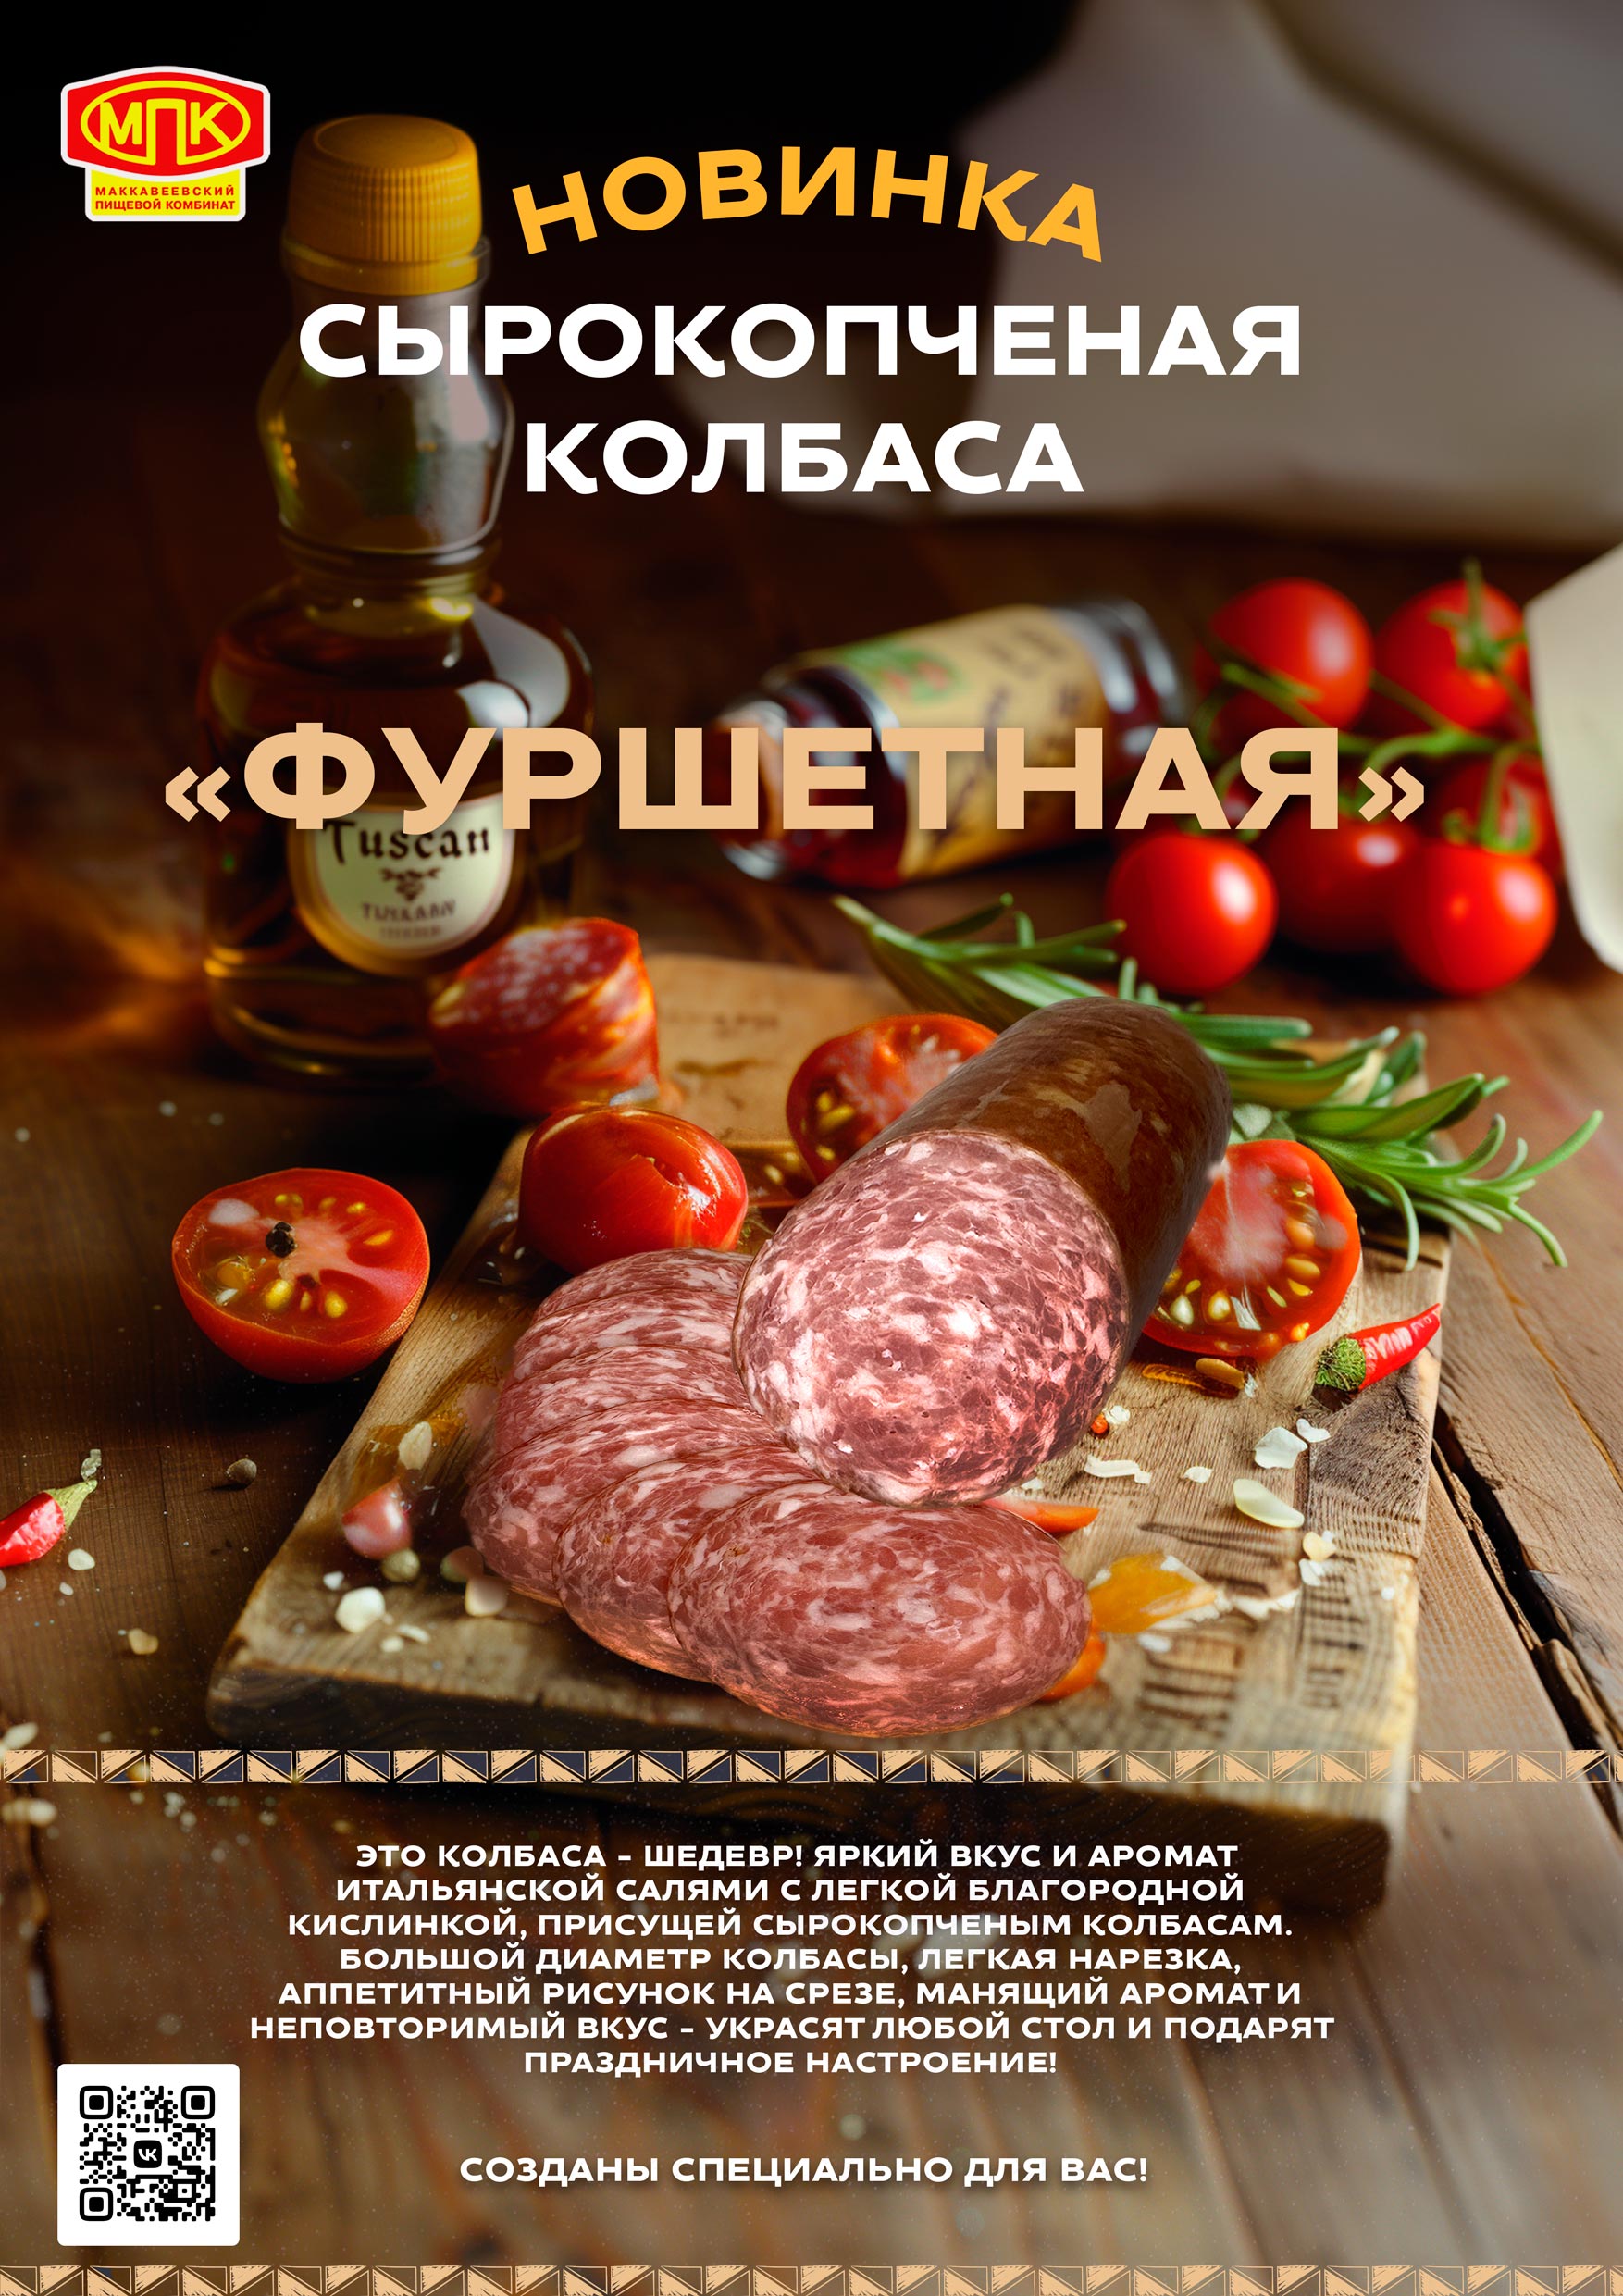 Сырокопченая колбаса "Фуршетная"